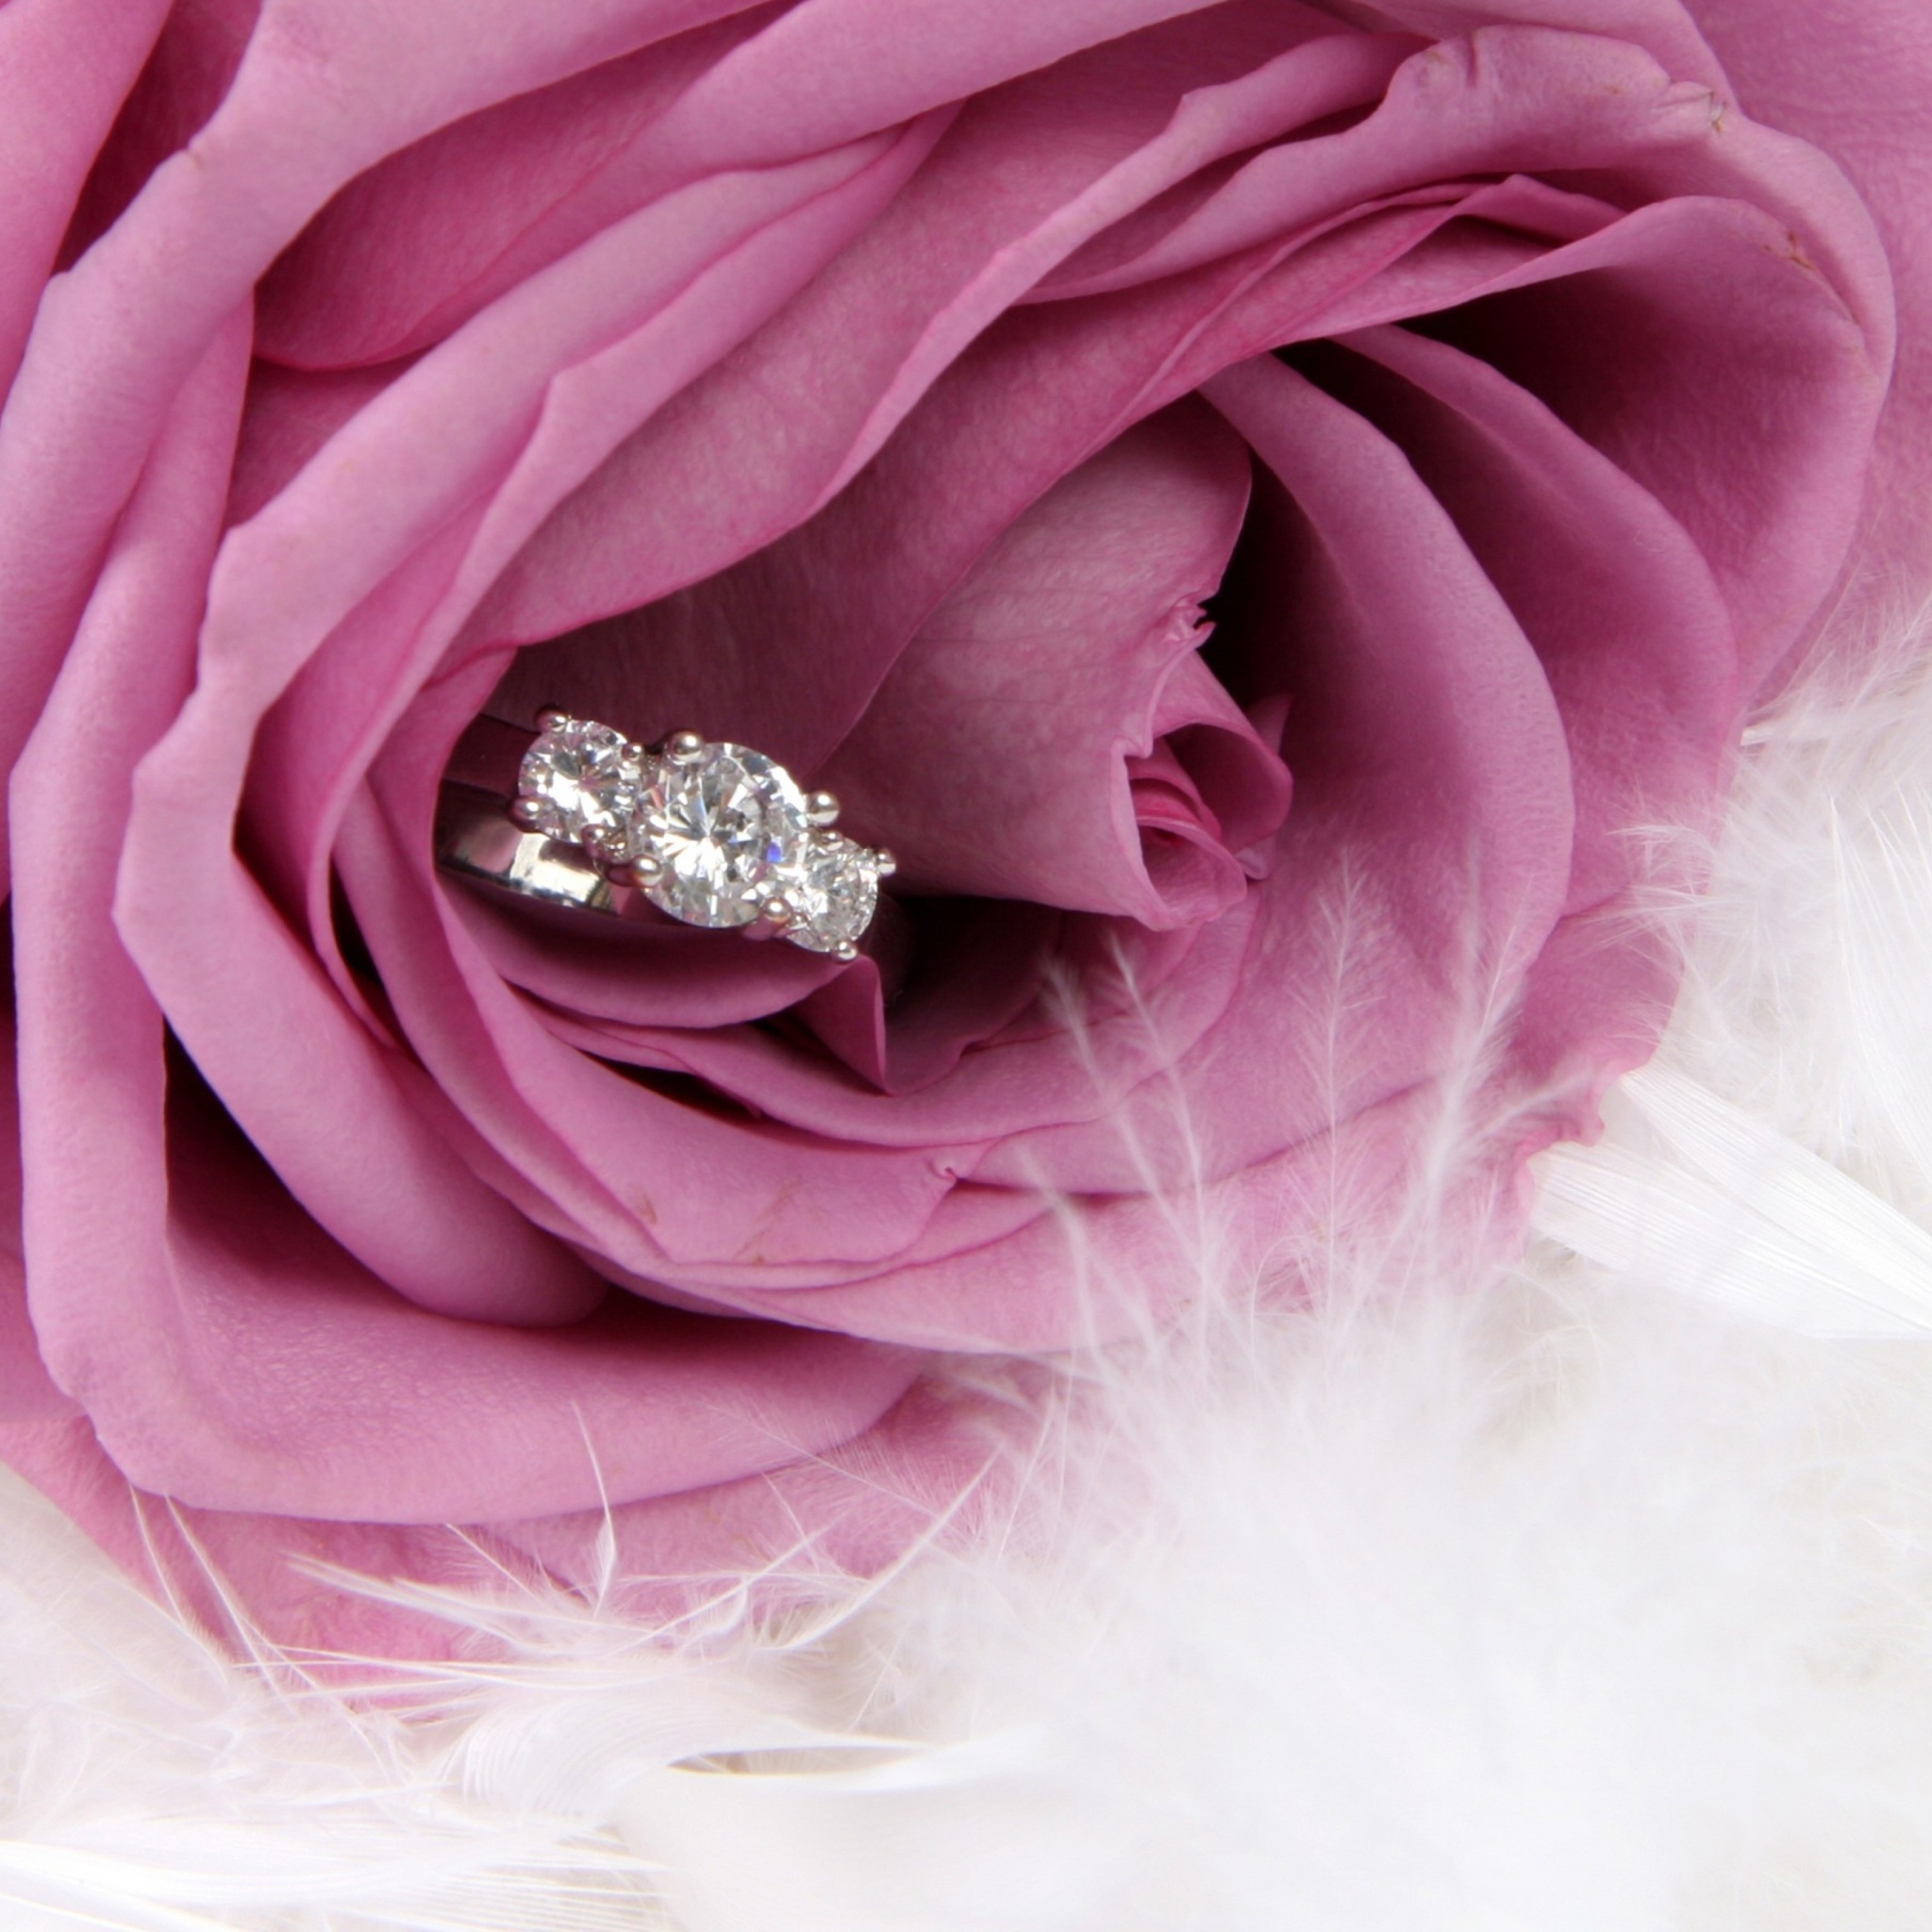 Engagement Ring In Pink Rose wallpaper 2048x2048